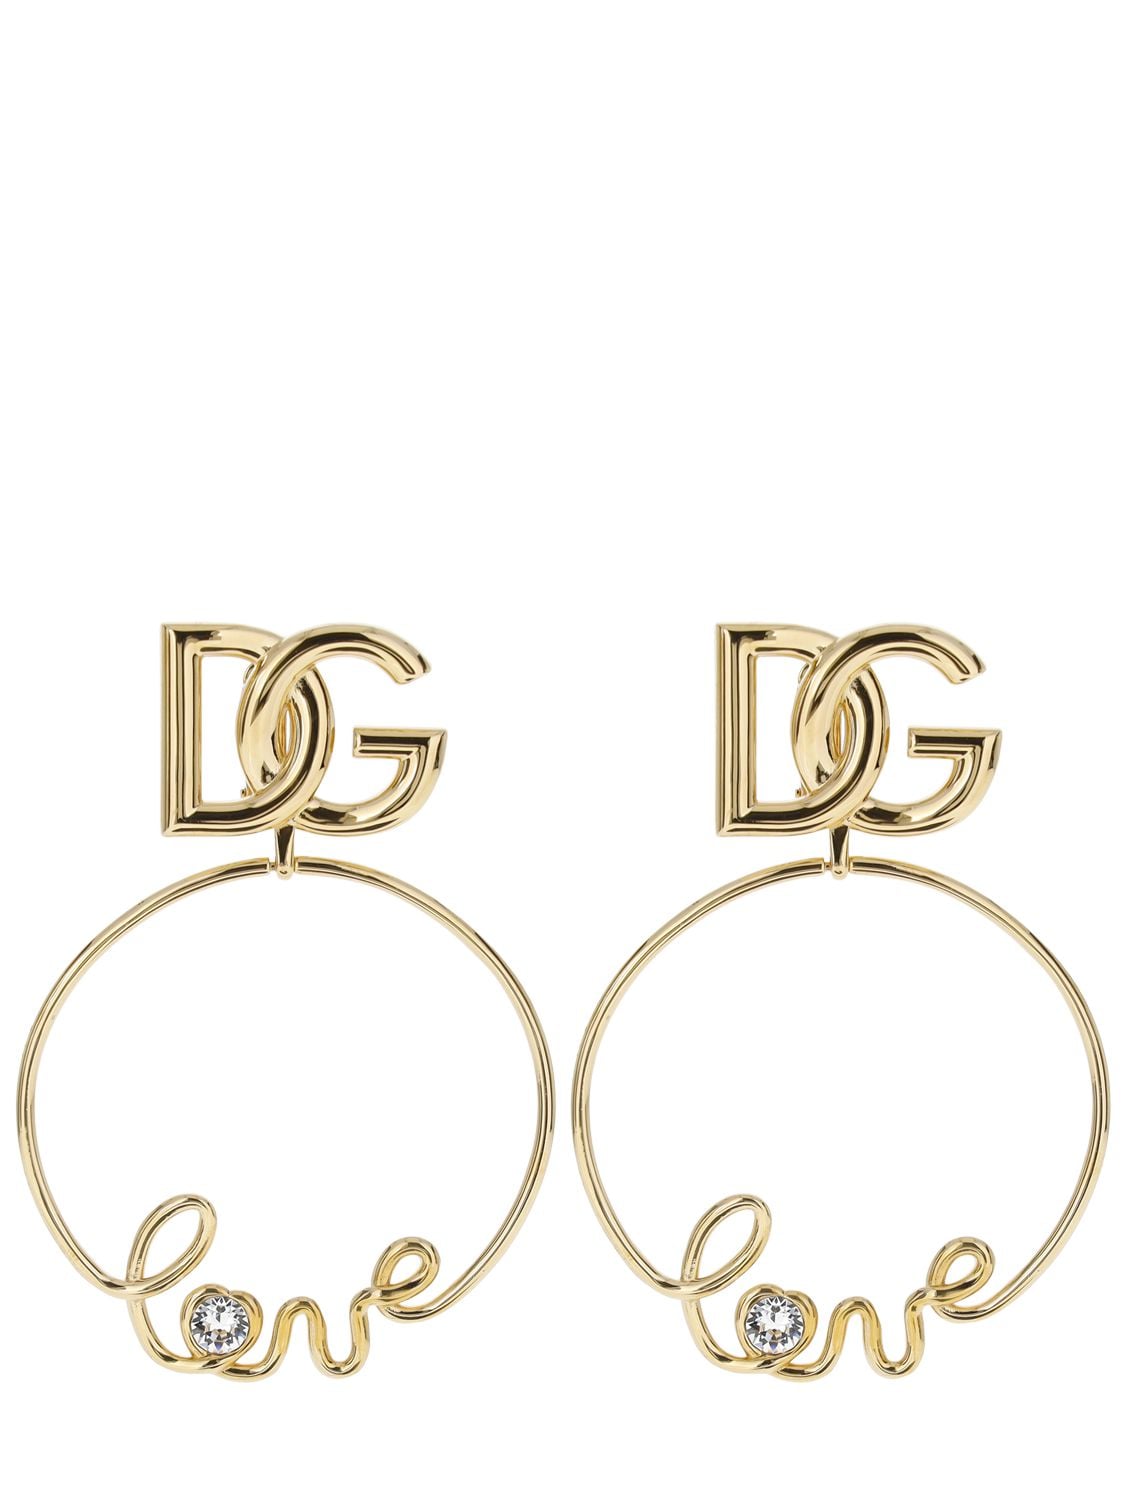 Love Dg Clip-on Earrings